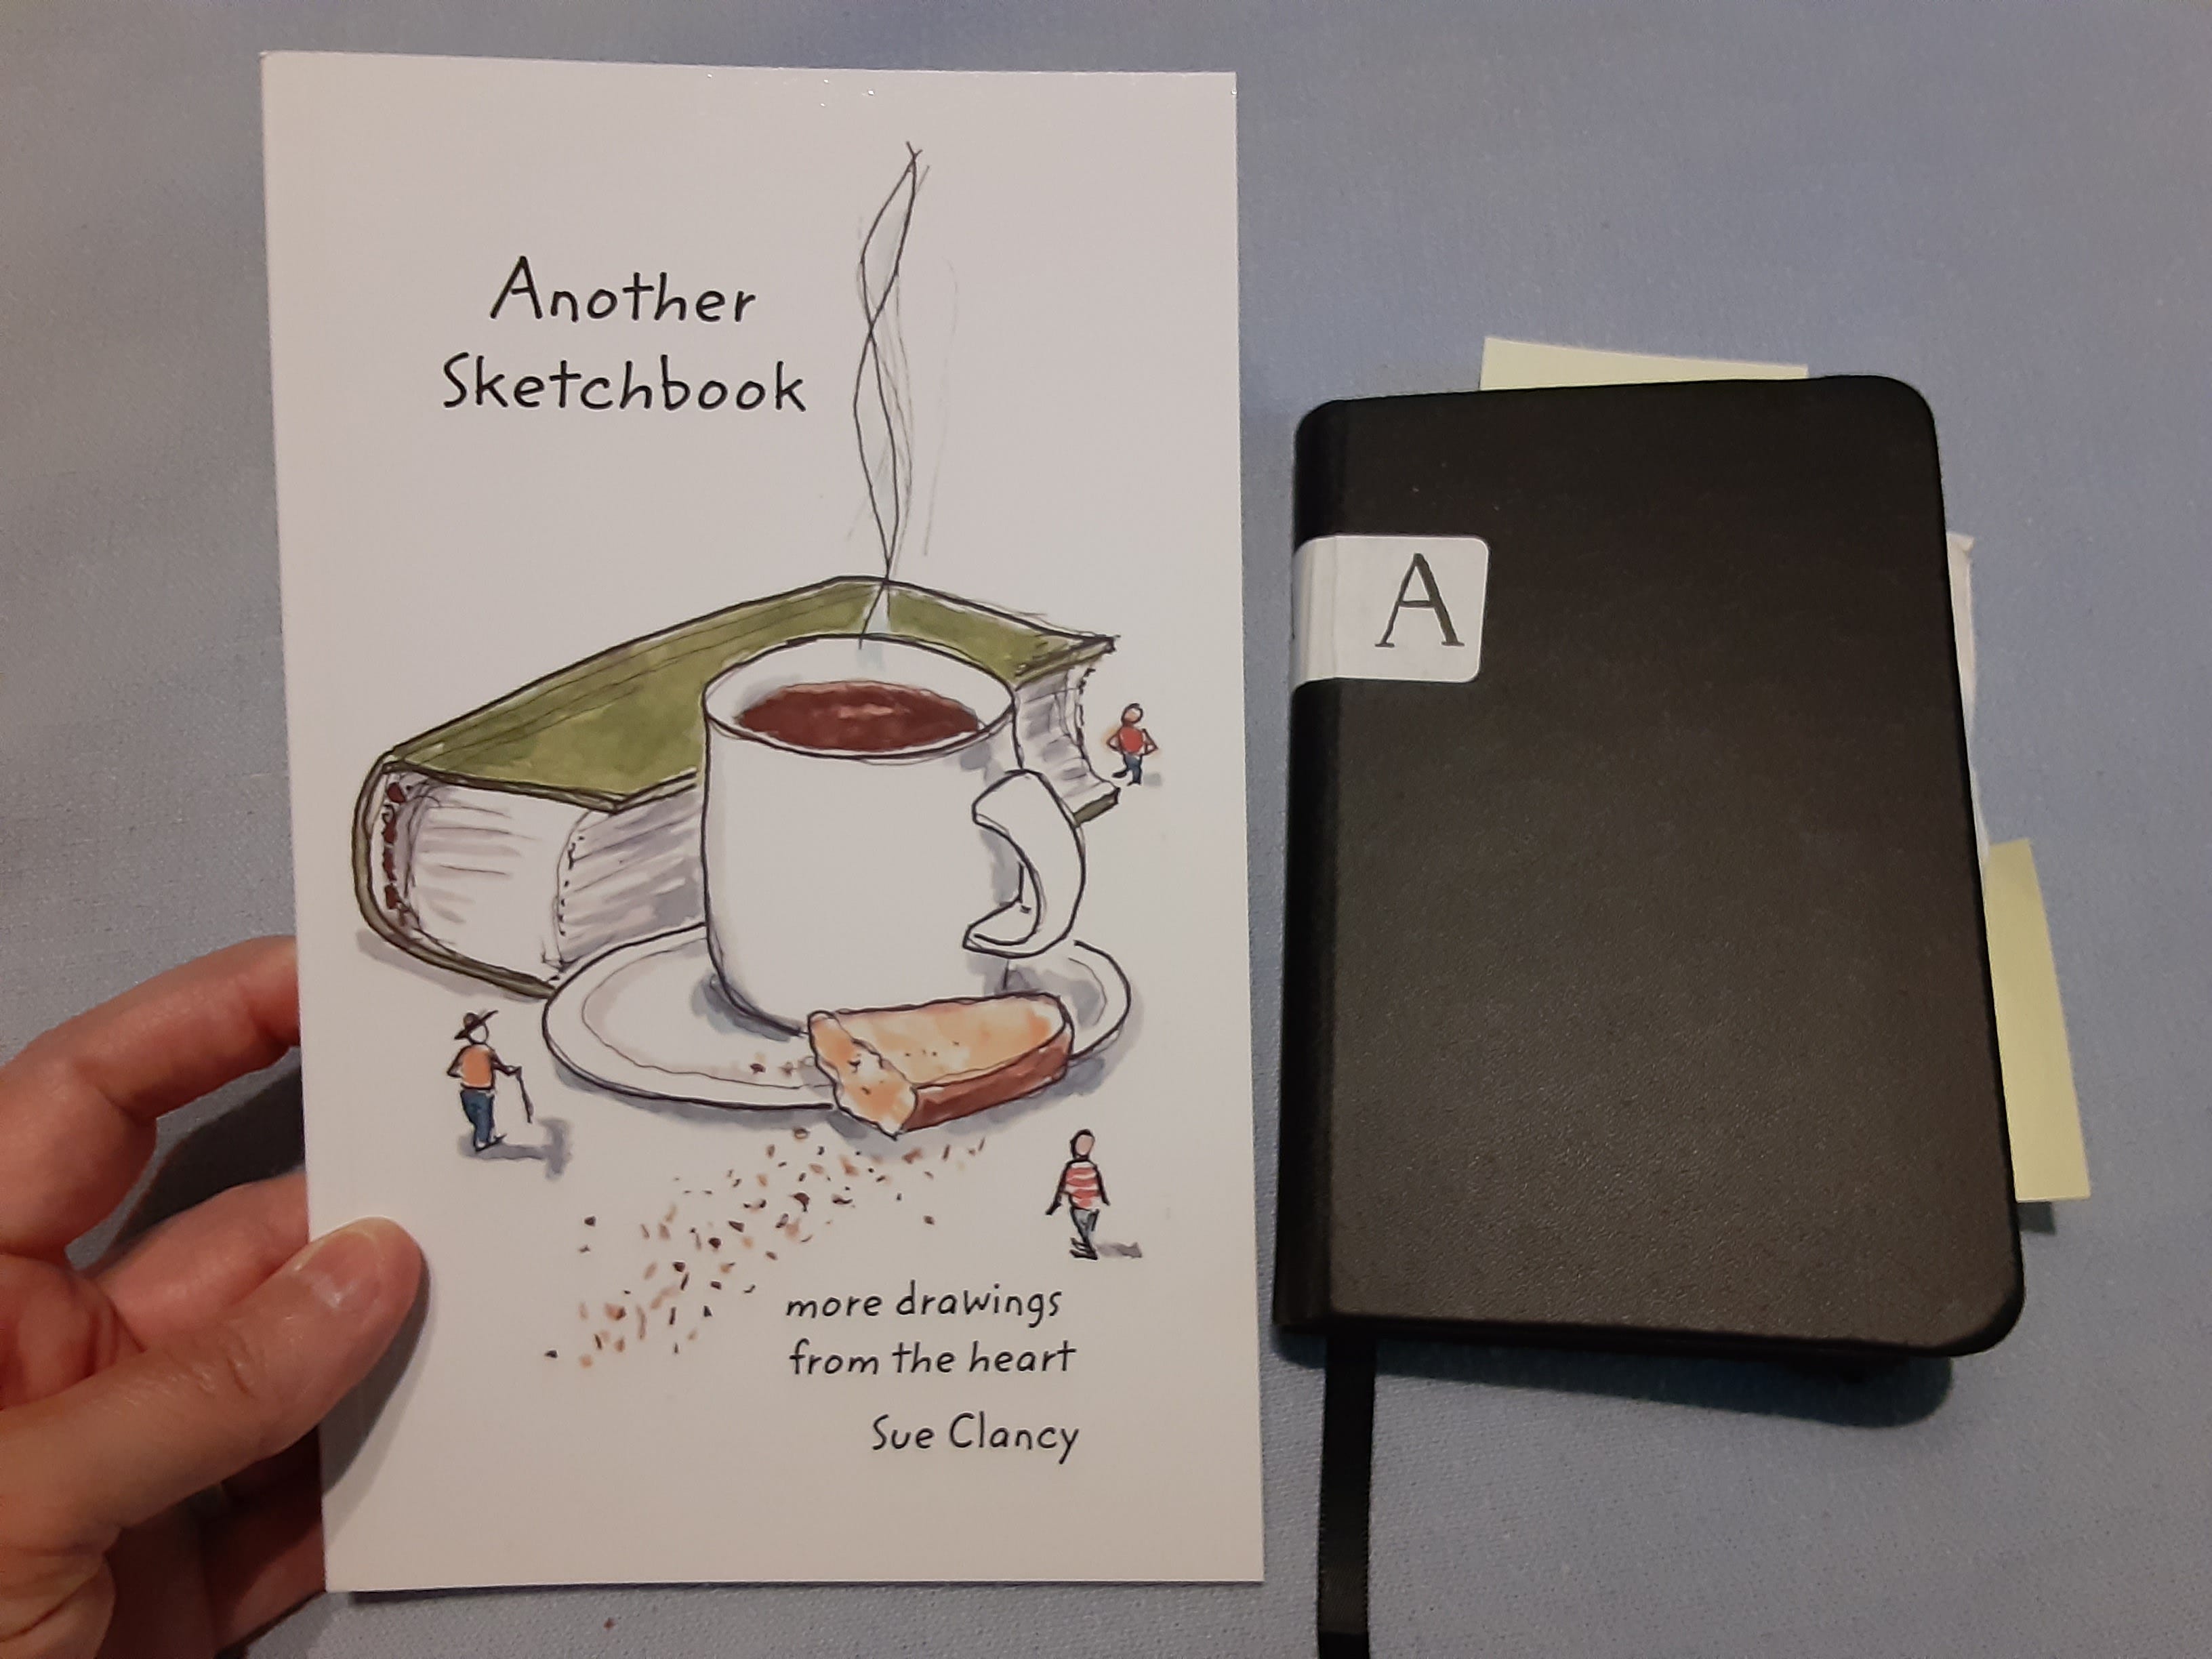 Feeding sketchbooks, notebooks - by Sue Clancy